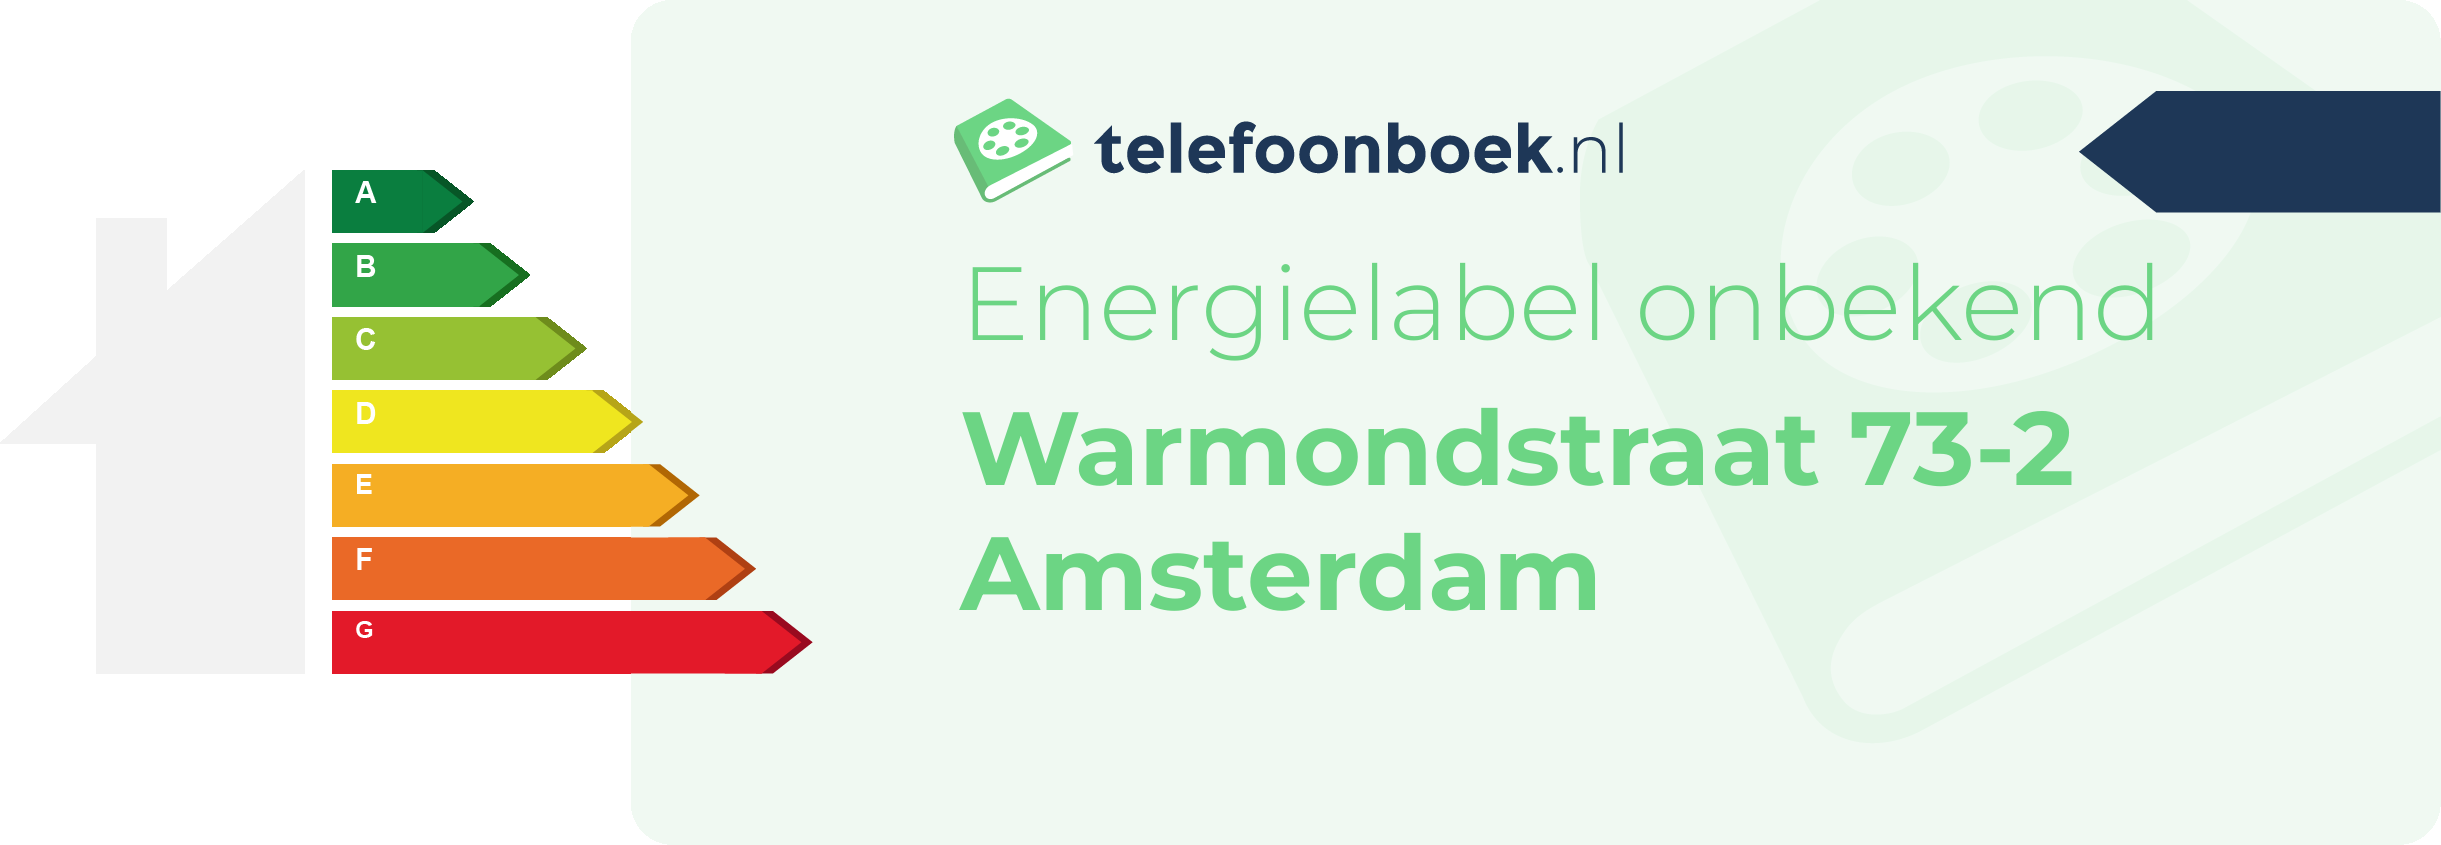 Energielabel Warmondstraat 73-2 Amsterdam